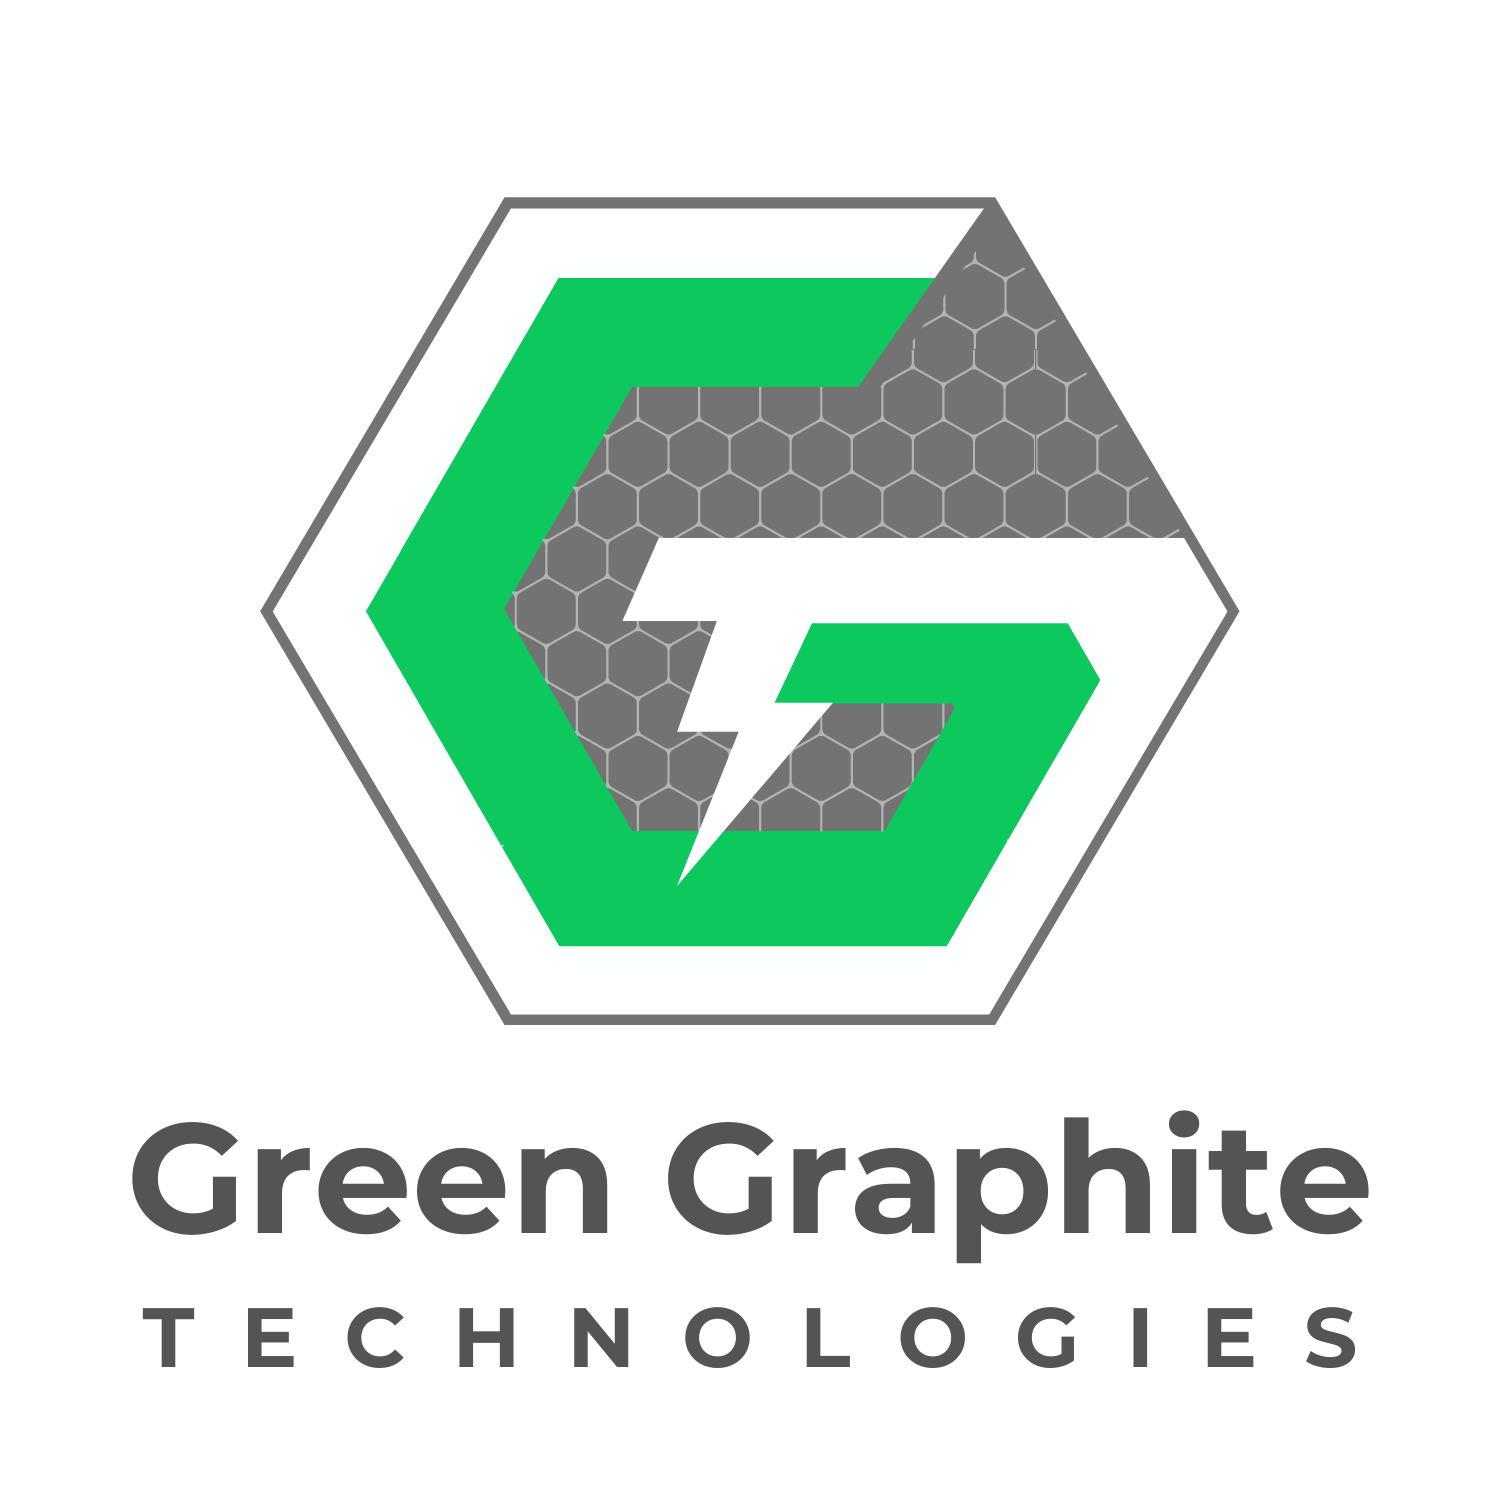 Green Graphite Technologies